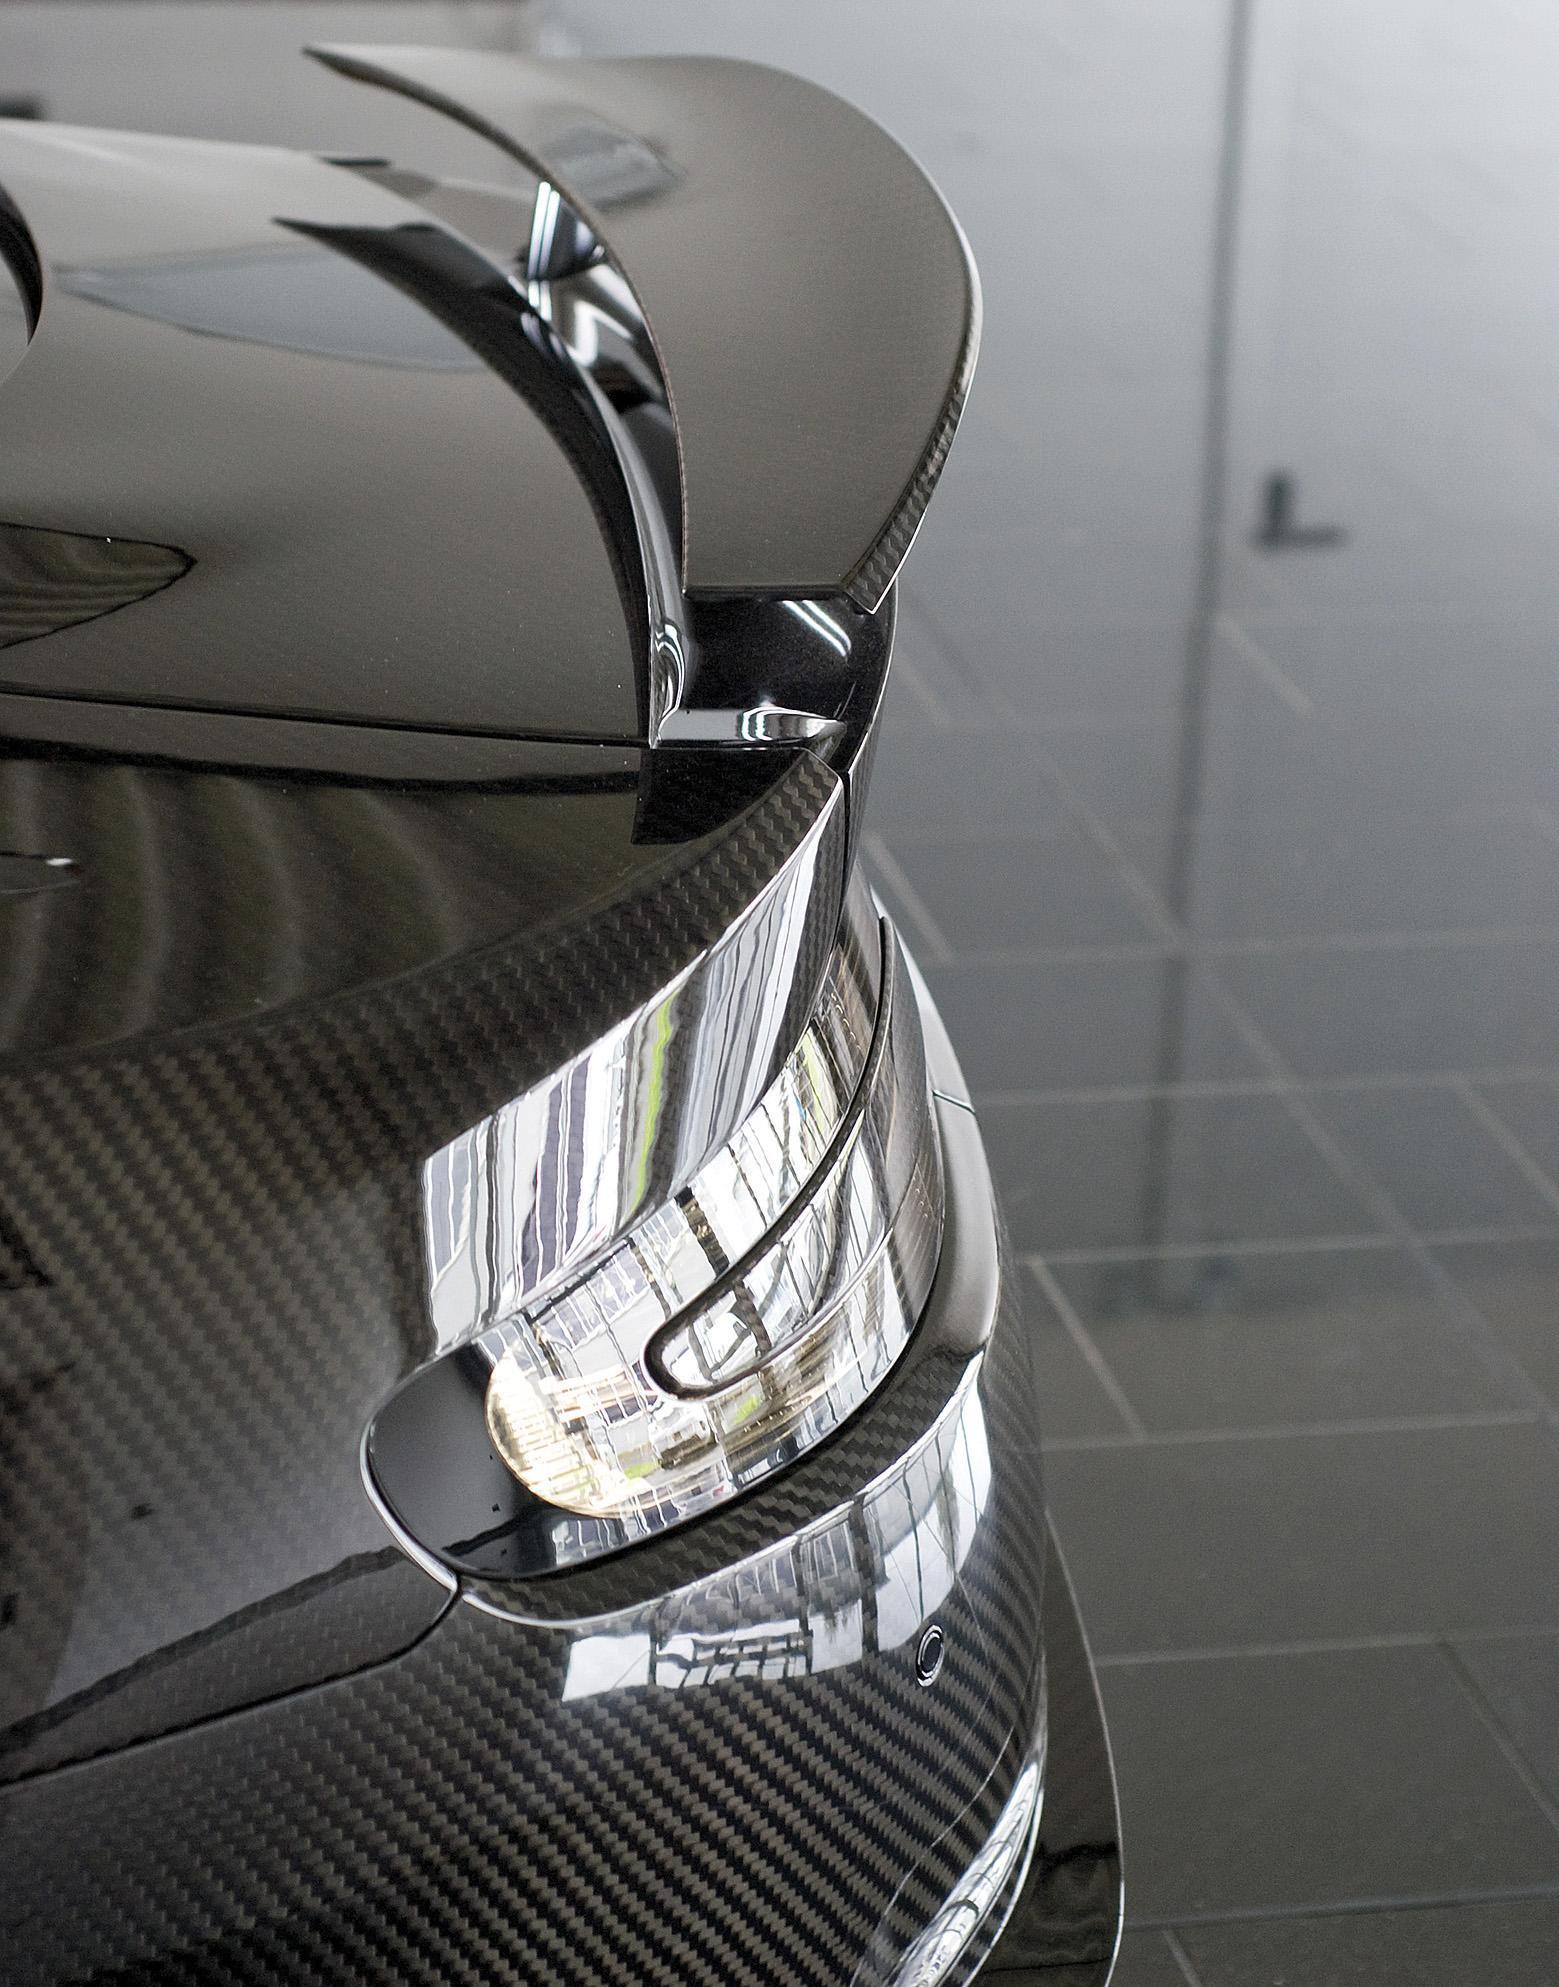 Mansory body kit for Aston Martin DBS/DB9 carbon